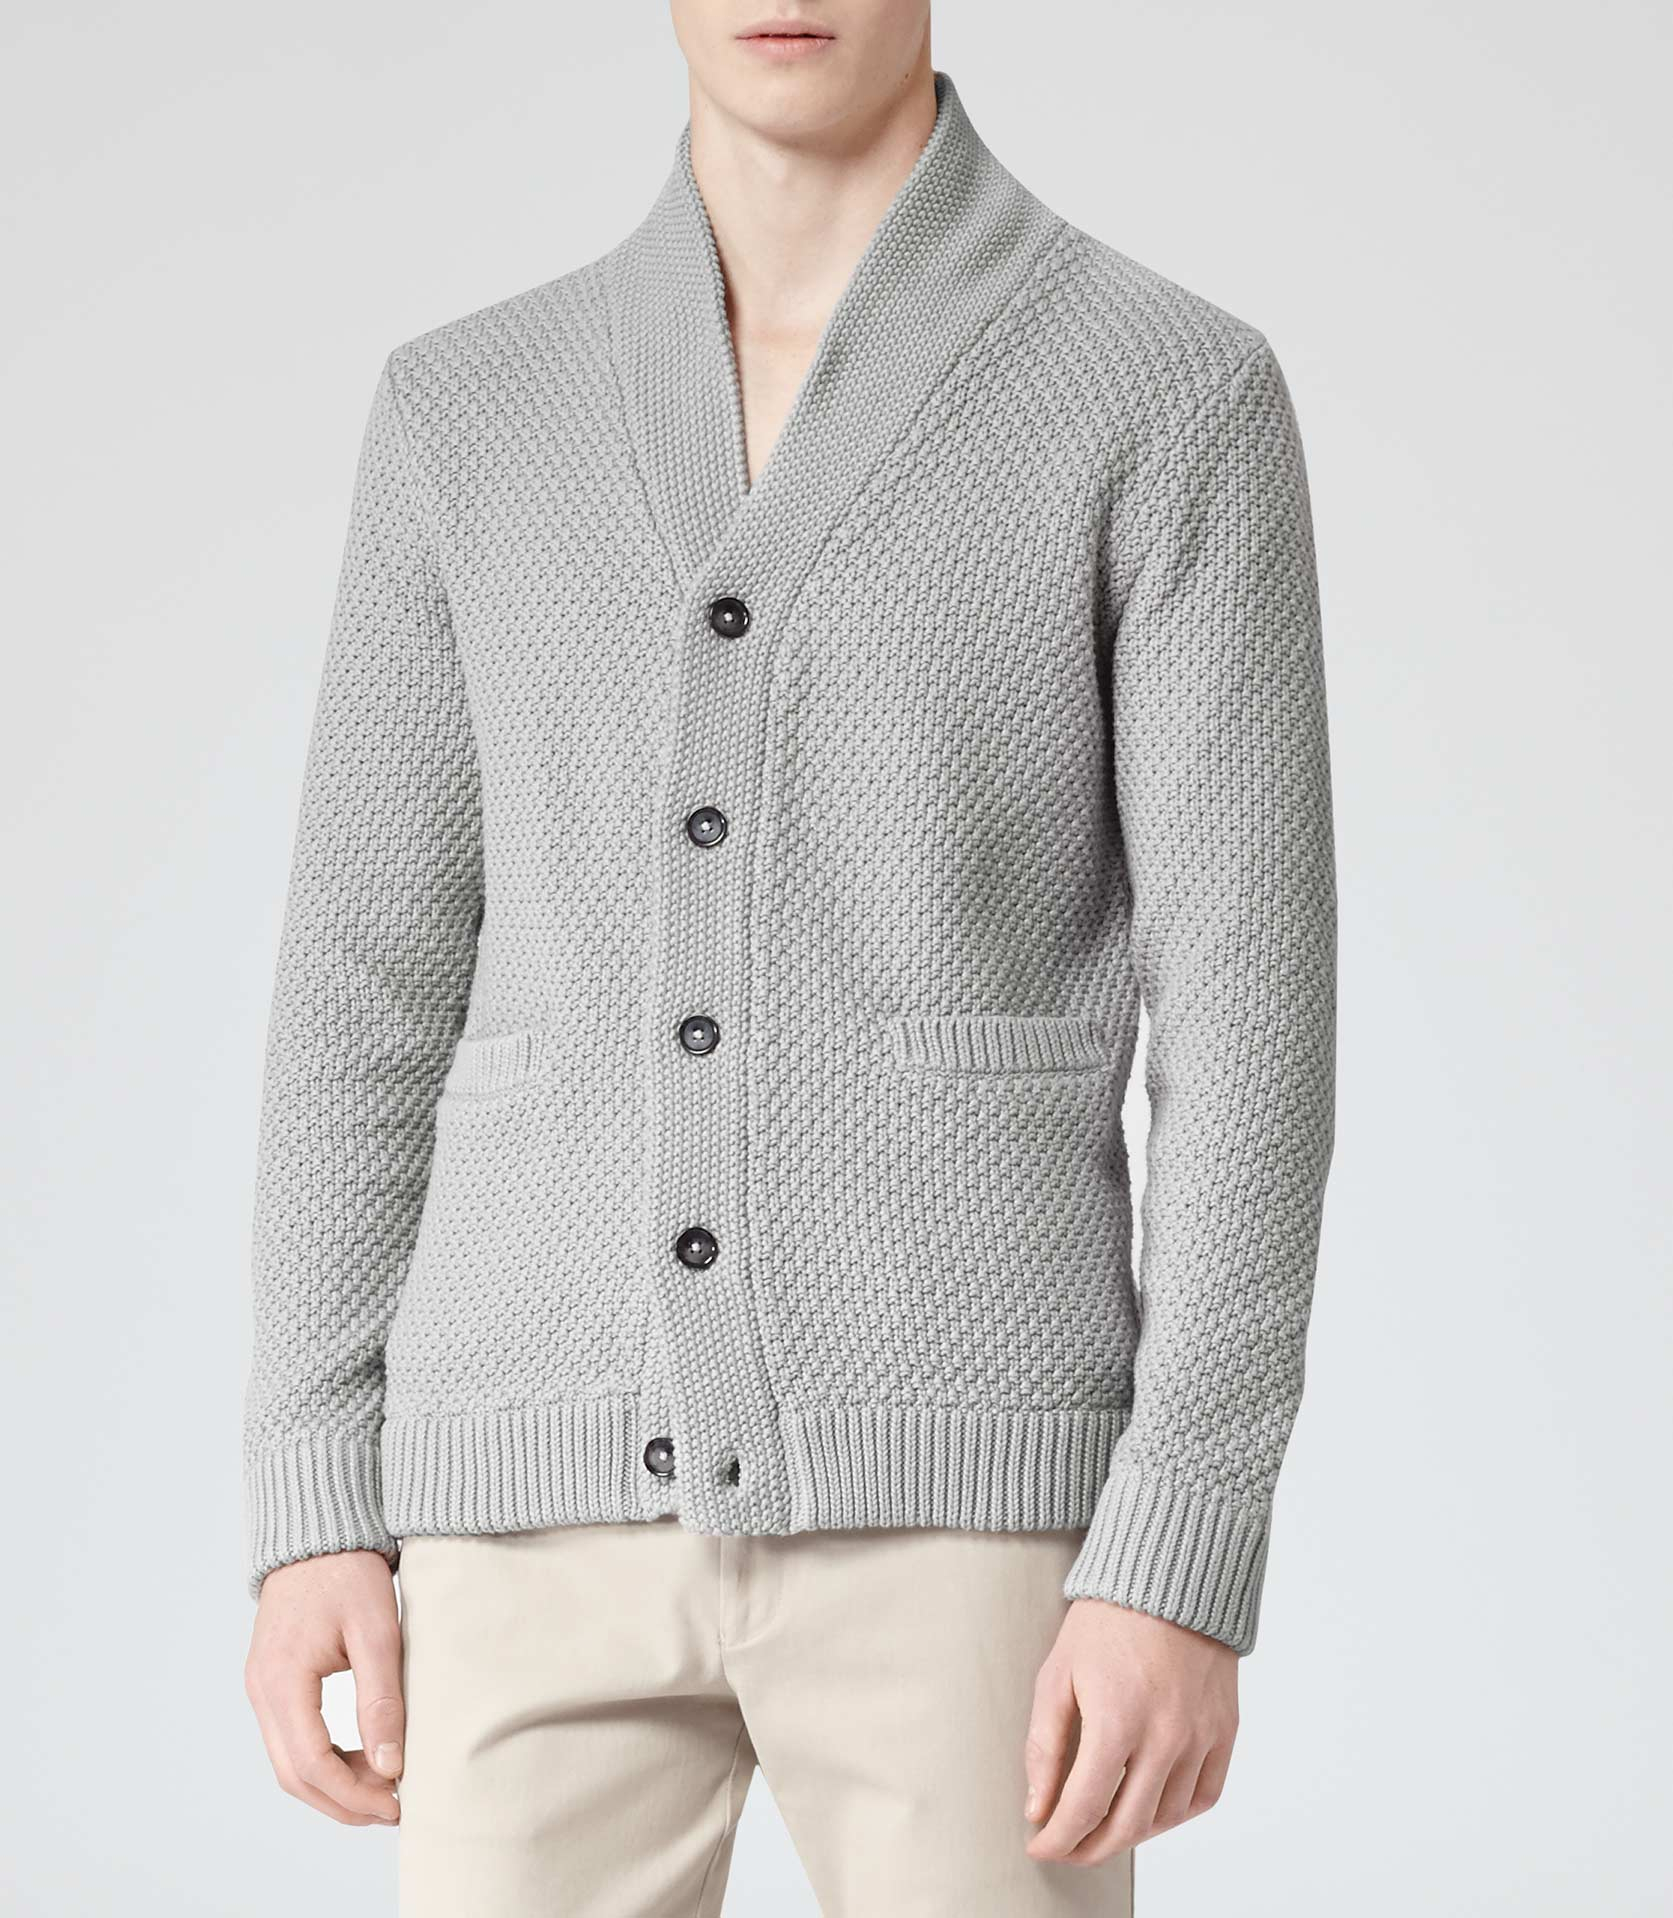 Reiss Molton Button Shawl Collar Cardigan in Gray for Men - Lyst